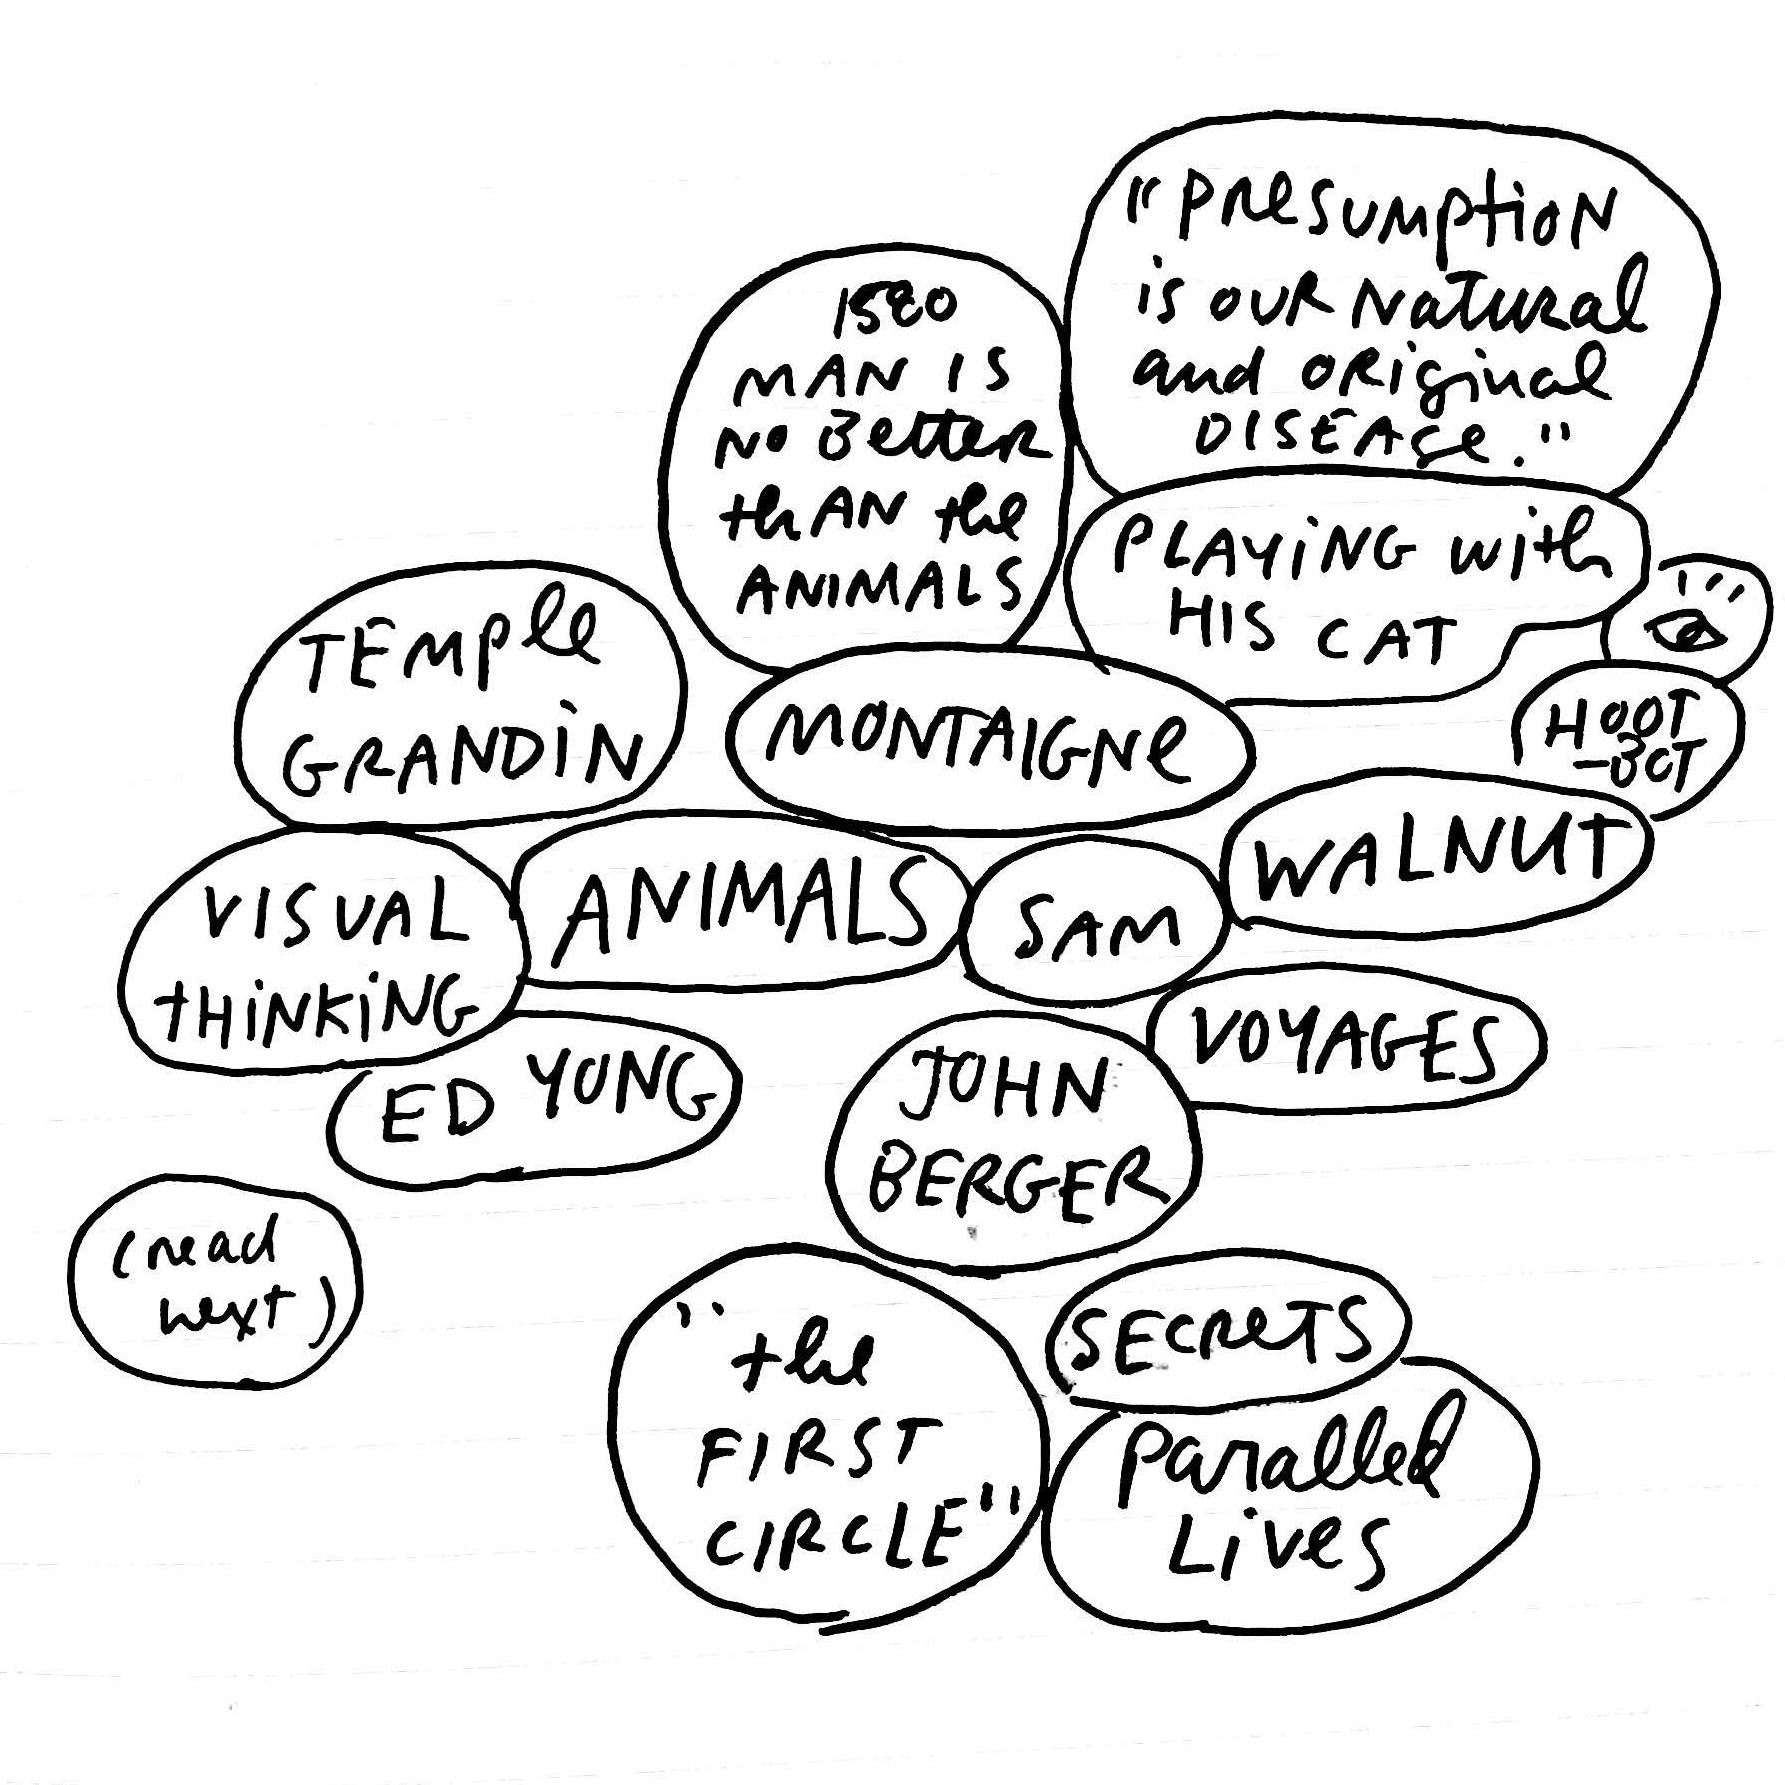 Reading about animals - Austin Kleon